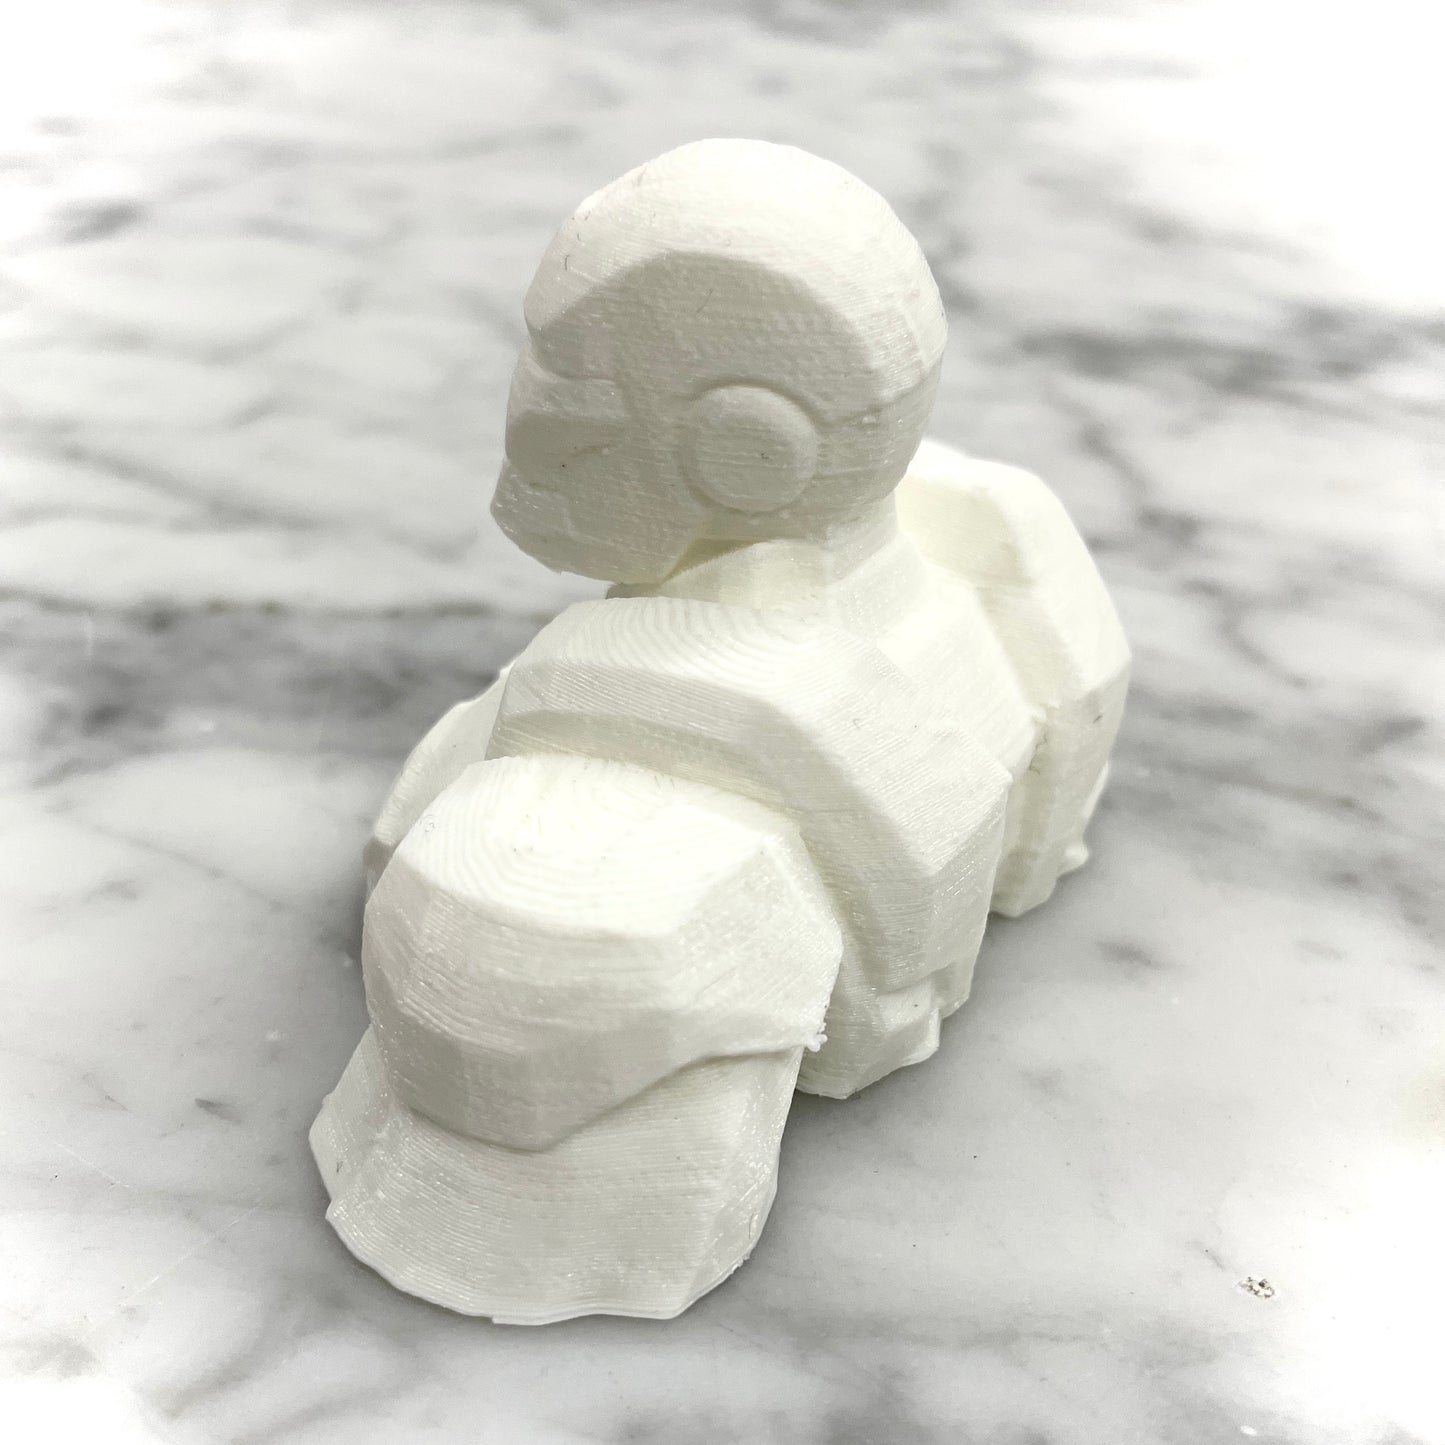 3D Printed Ironman Desk Buddy